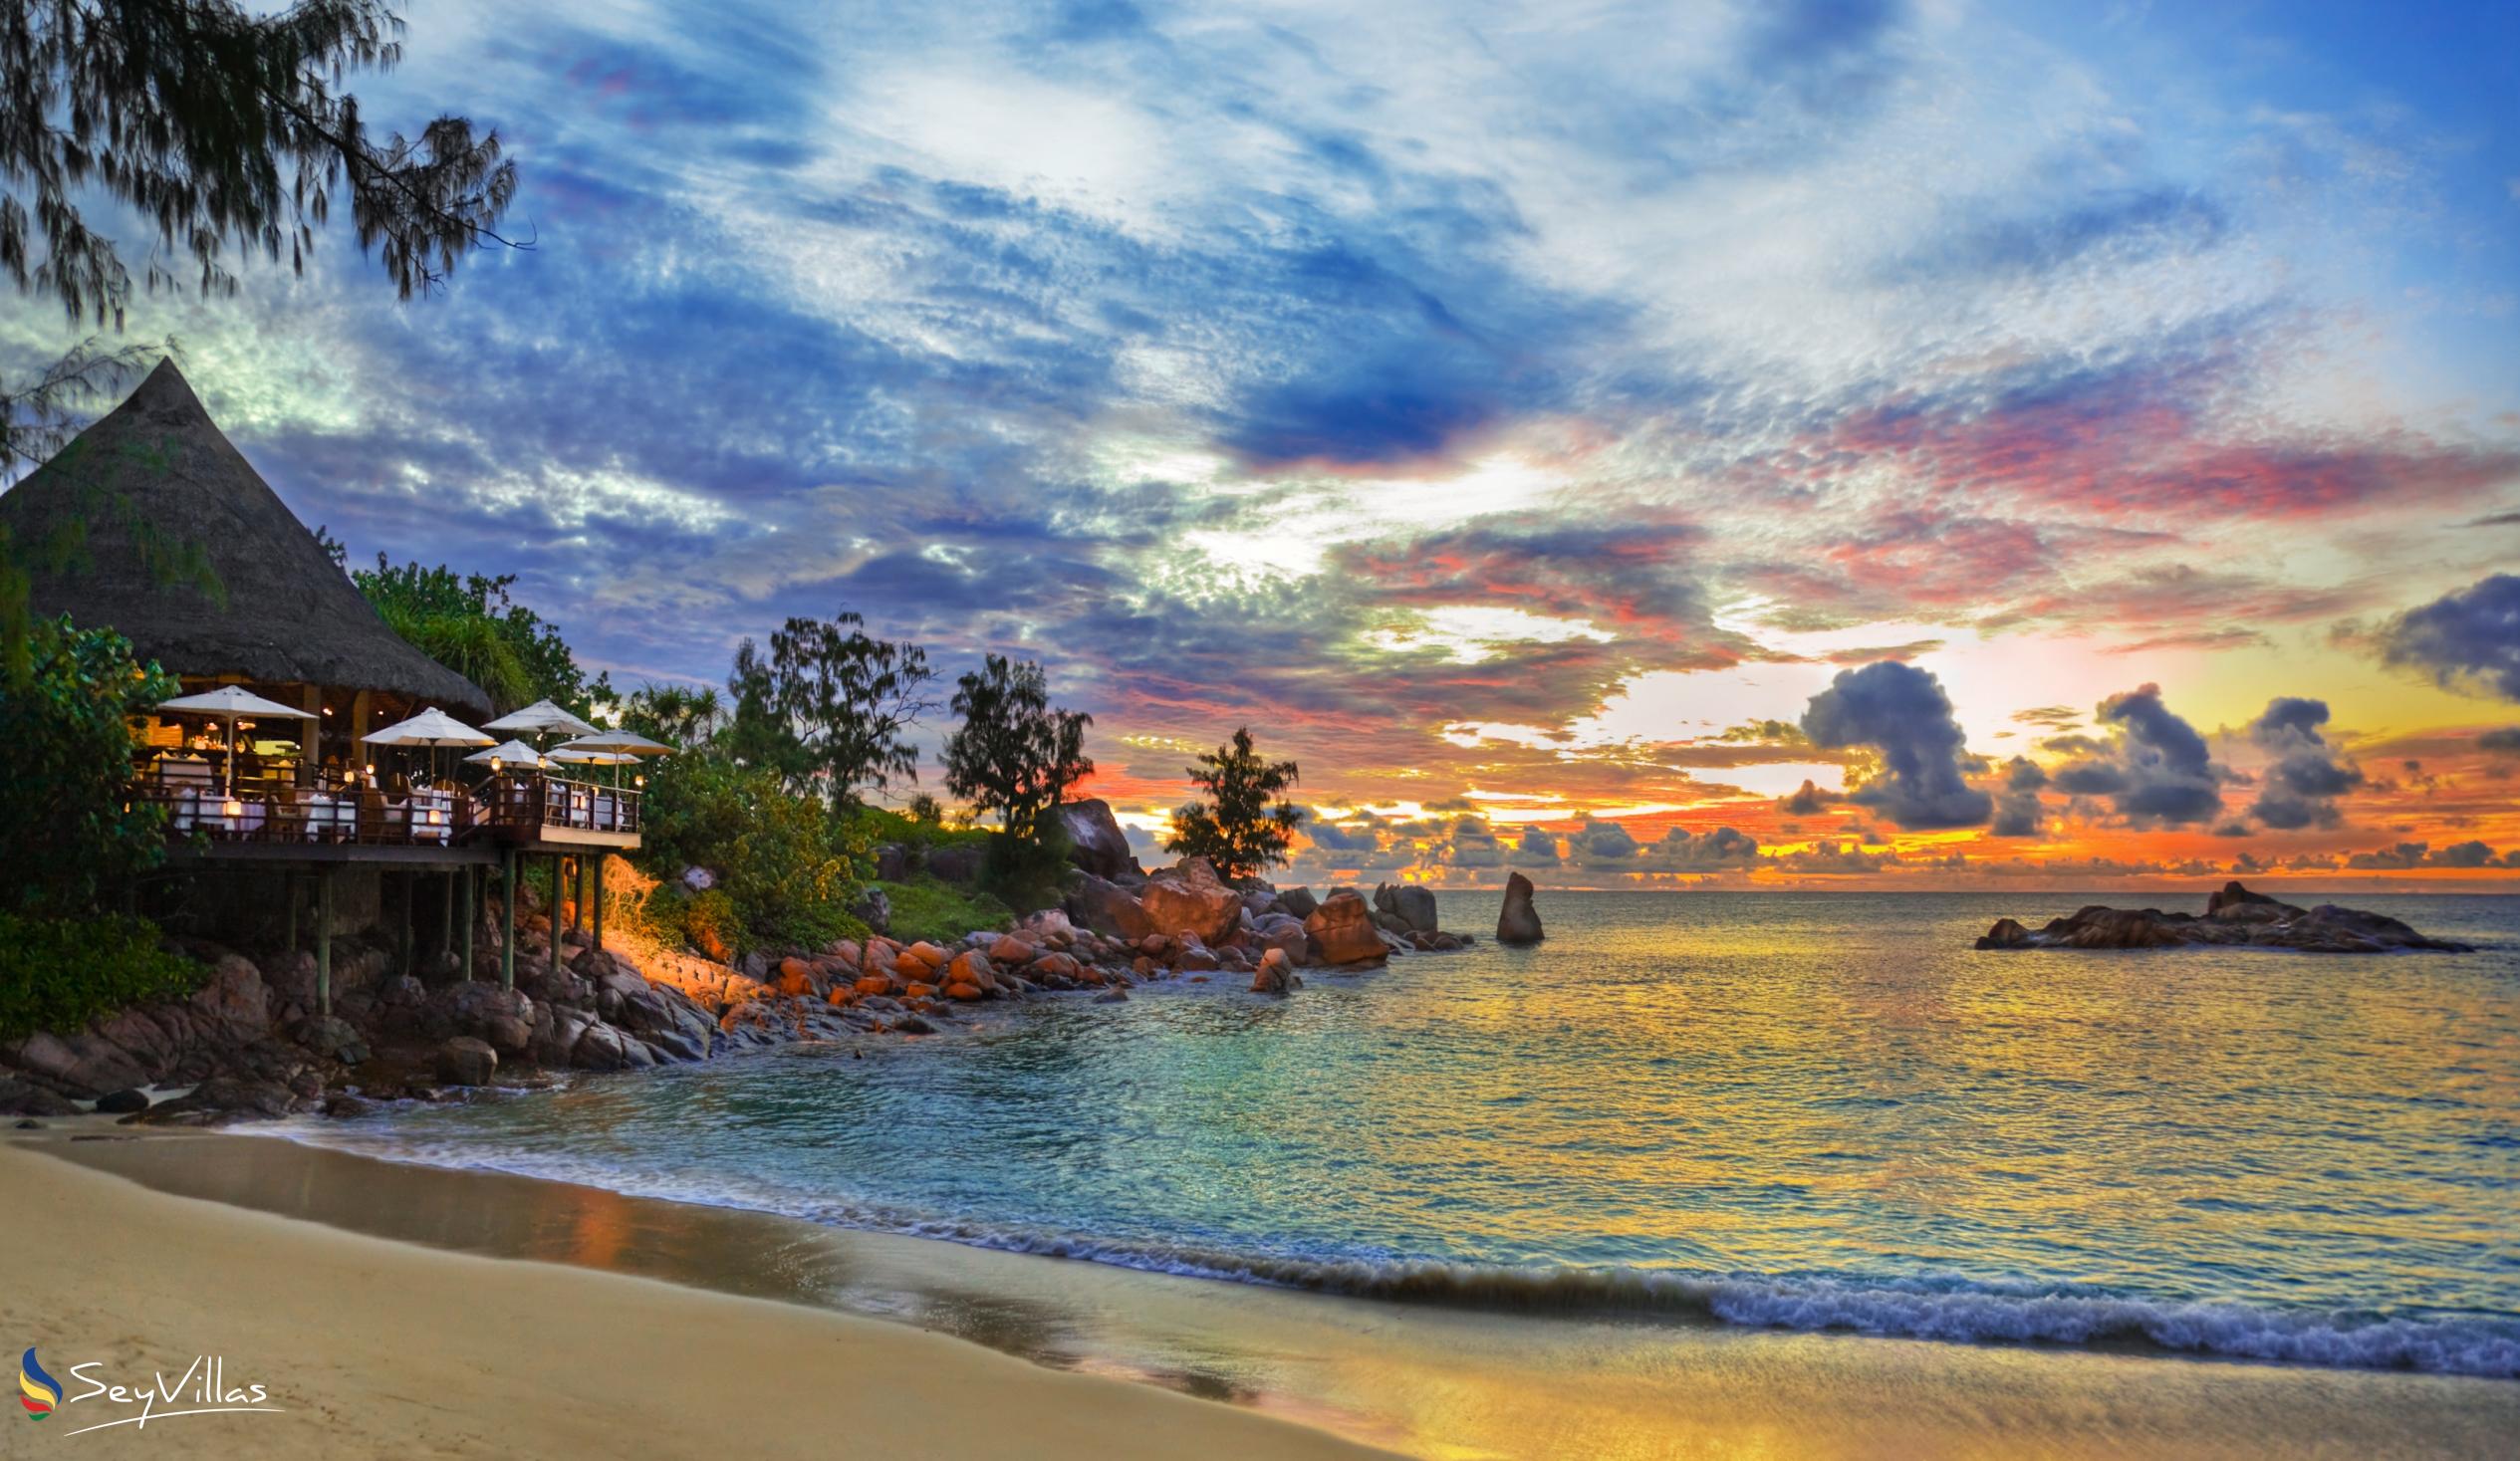 Photo 41: Pegasus Cruise (Variety Garden of Eden 7 nights) - Beaches - Seychelles (Seychelles)